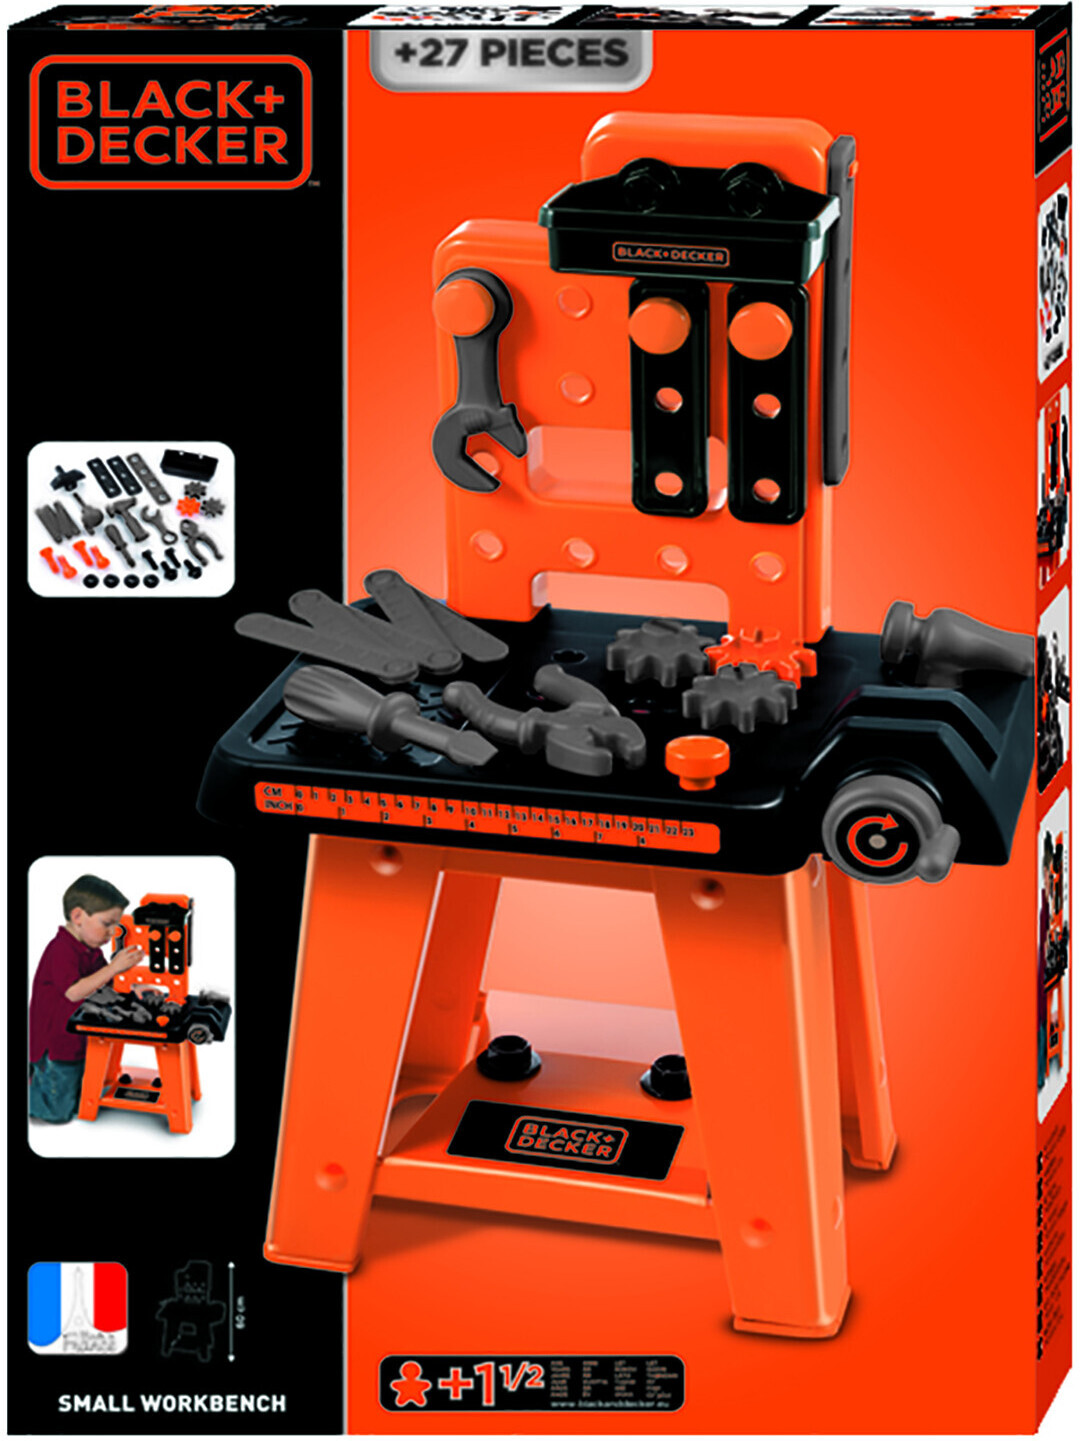 chance Specified Plush Doll Black+Decker Workbench -työkalupenkki – Verkkokauppa.com